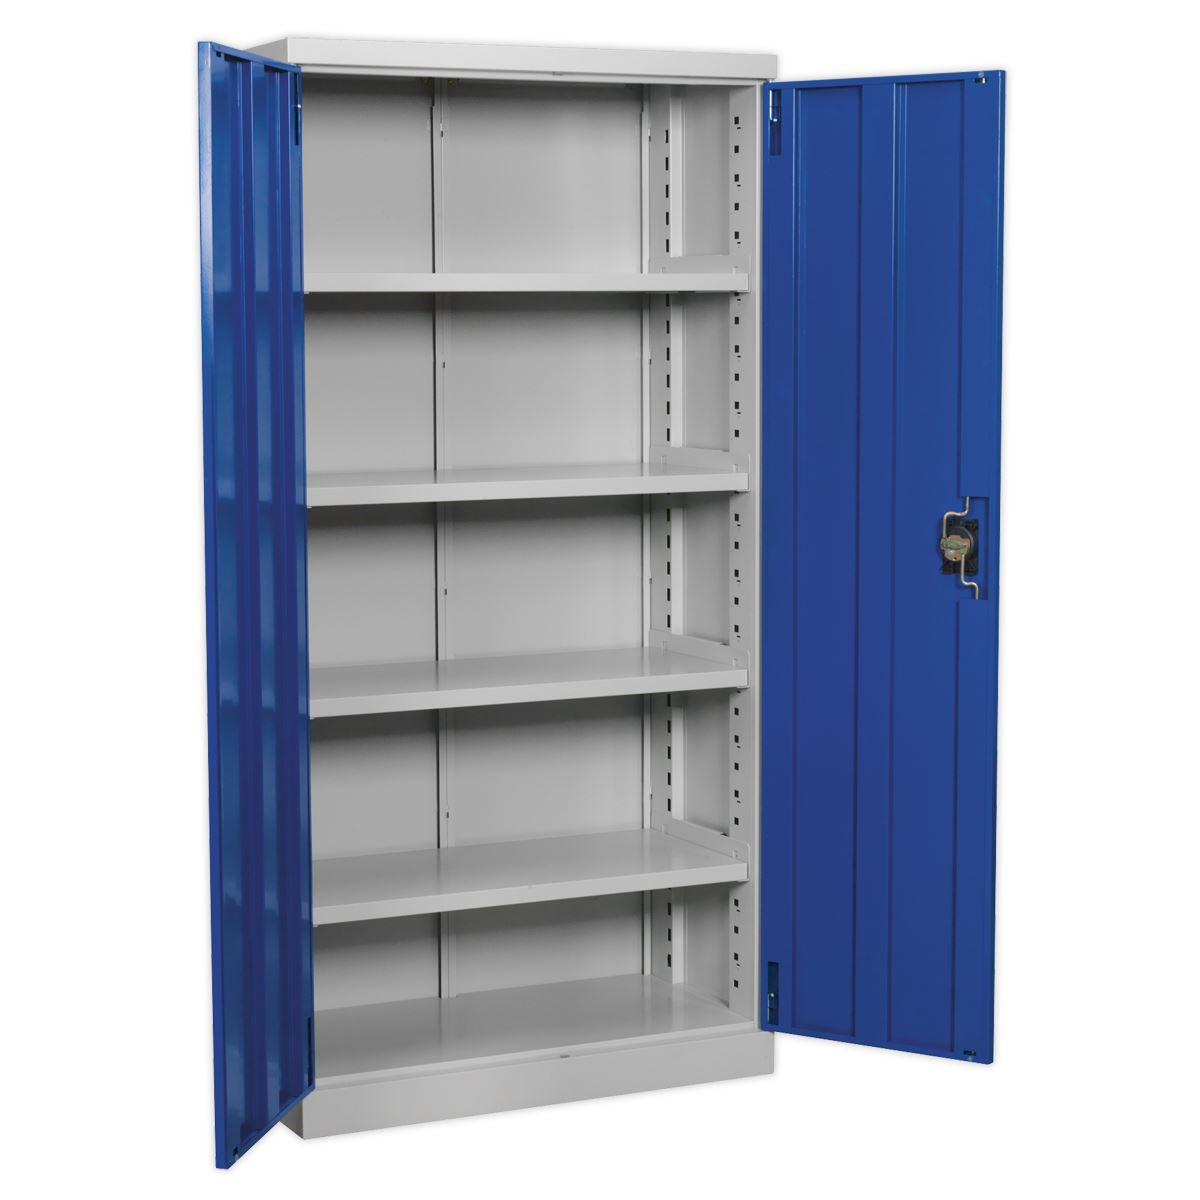 Sealey Premier Industrial Industrial Cabinet 4 Shelf 1800mm